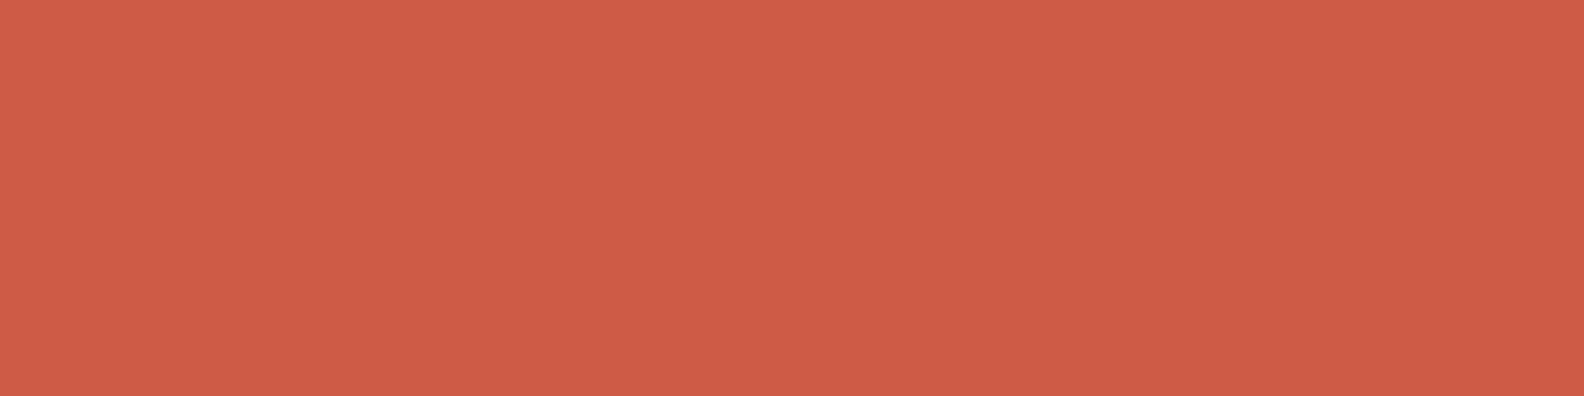 1584x396 Dark Coral Solid Color Background